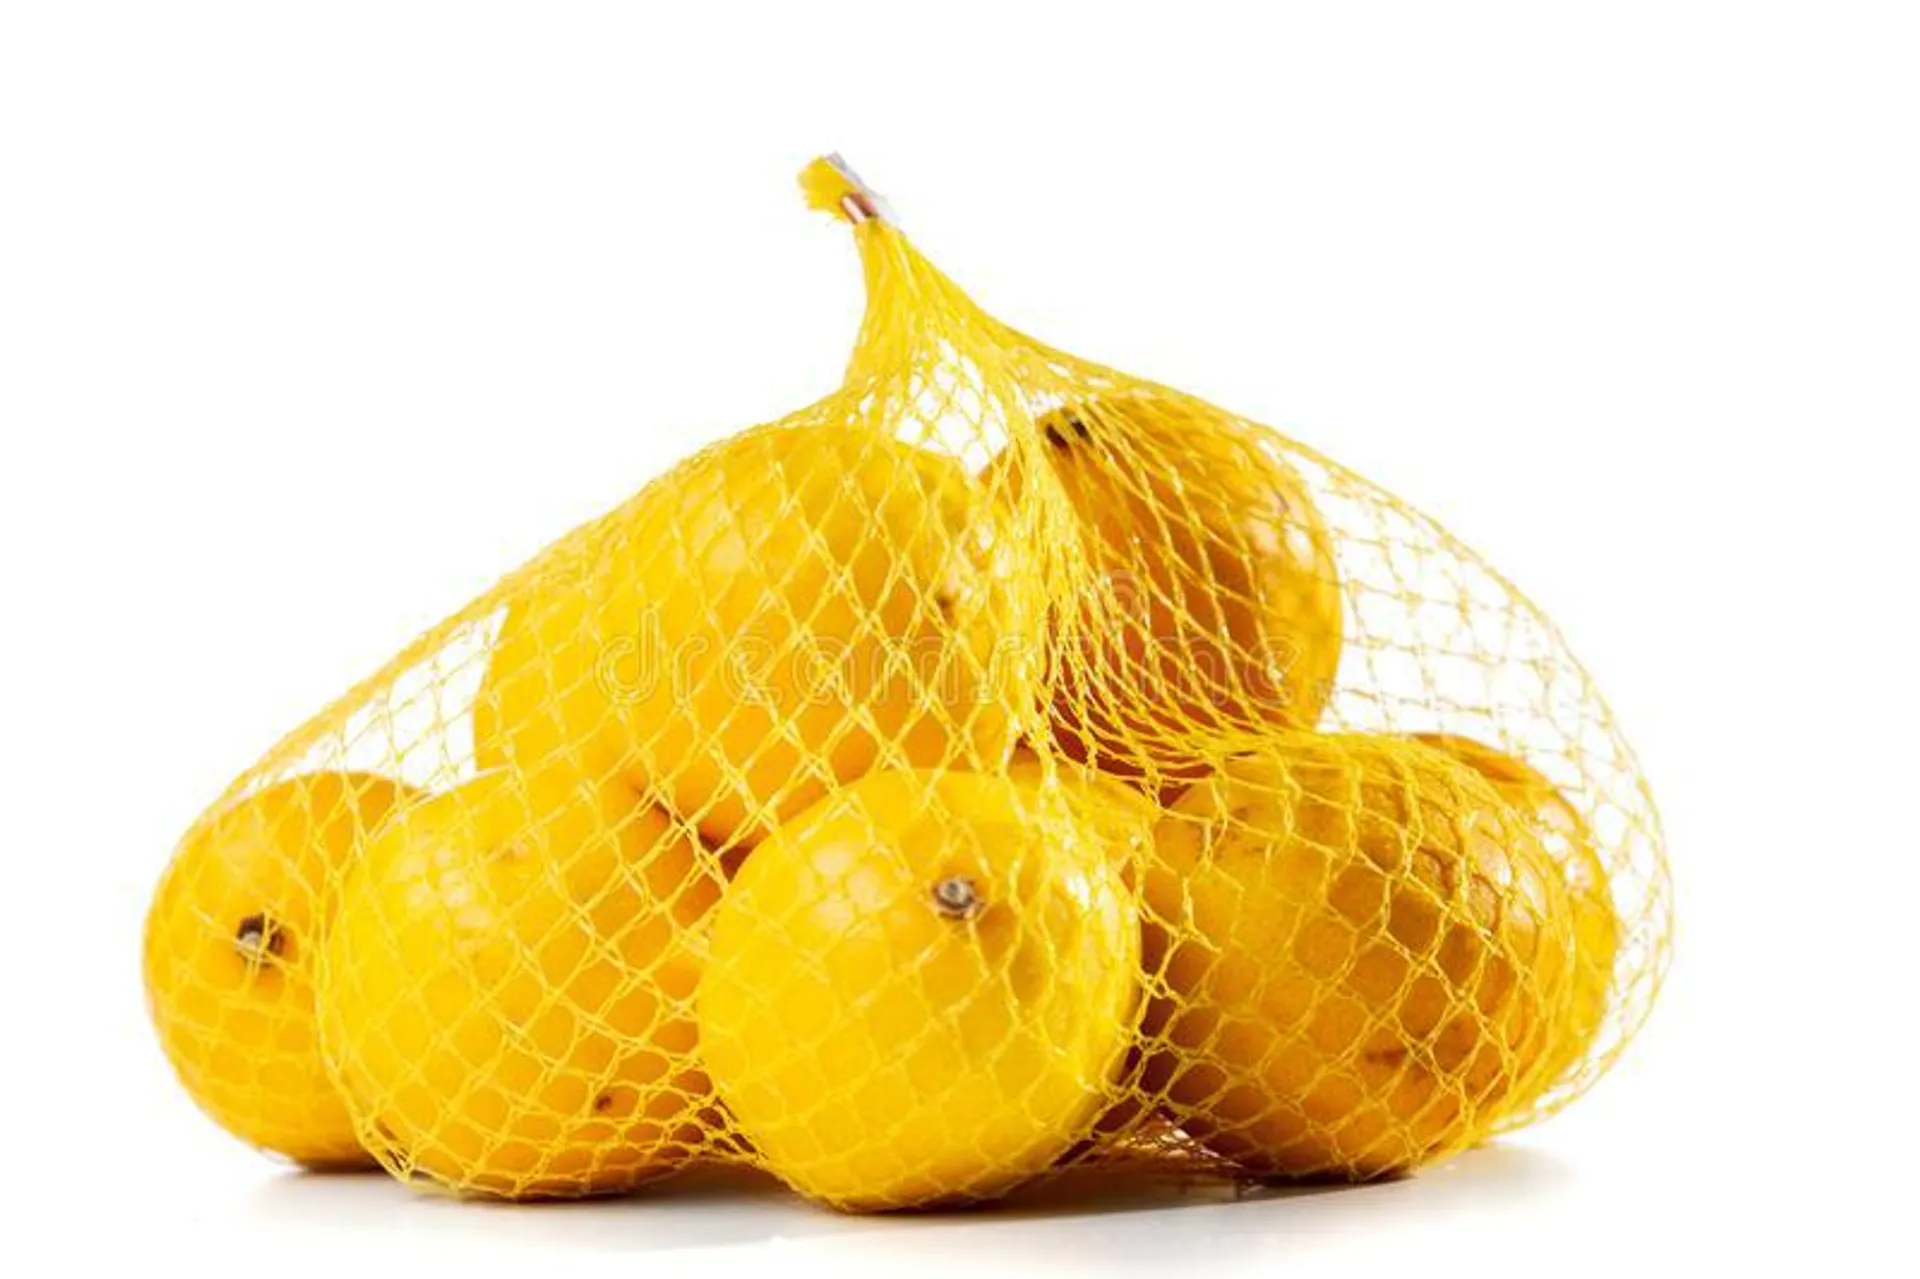 Organic Lemons Bag